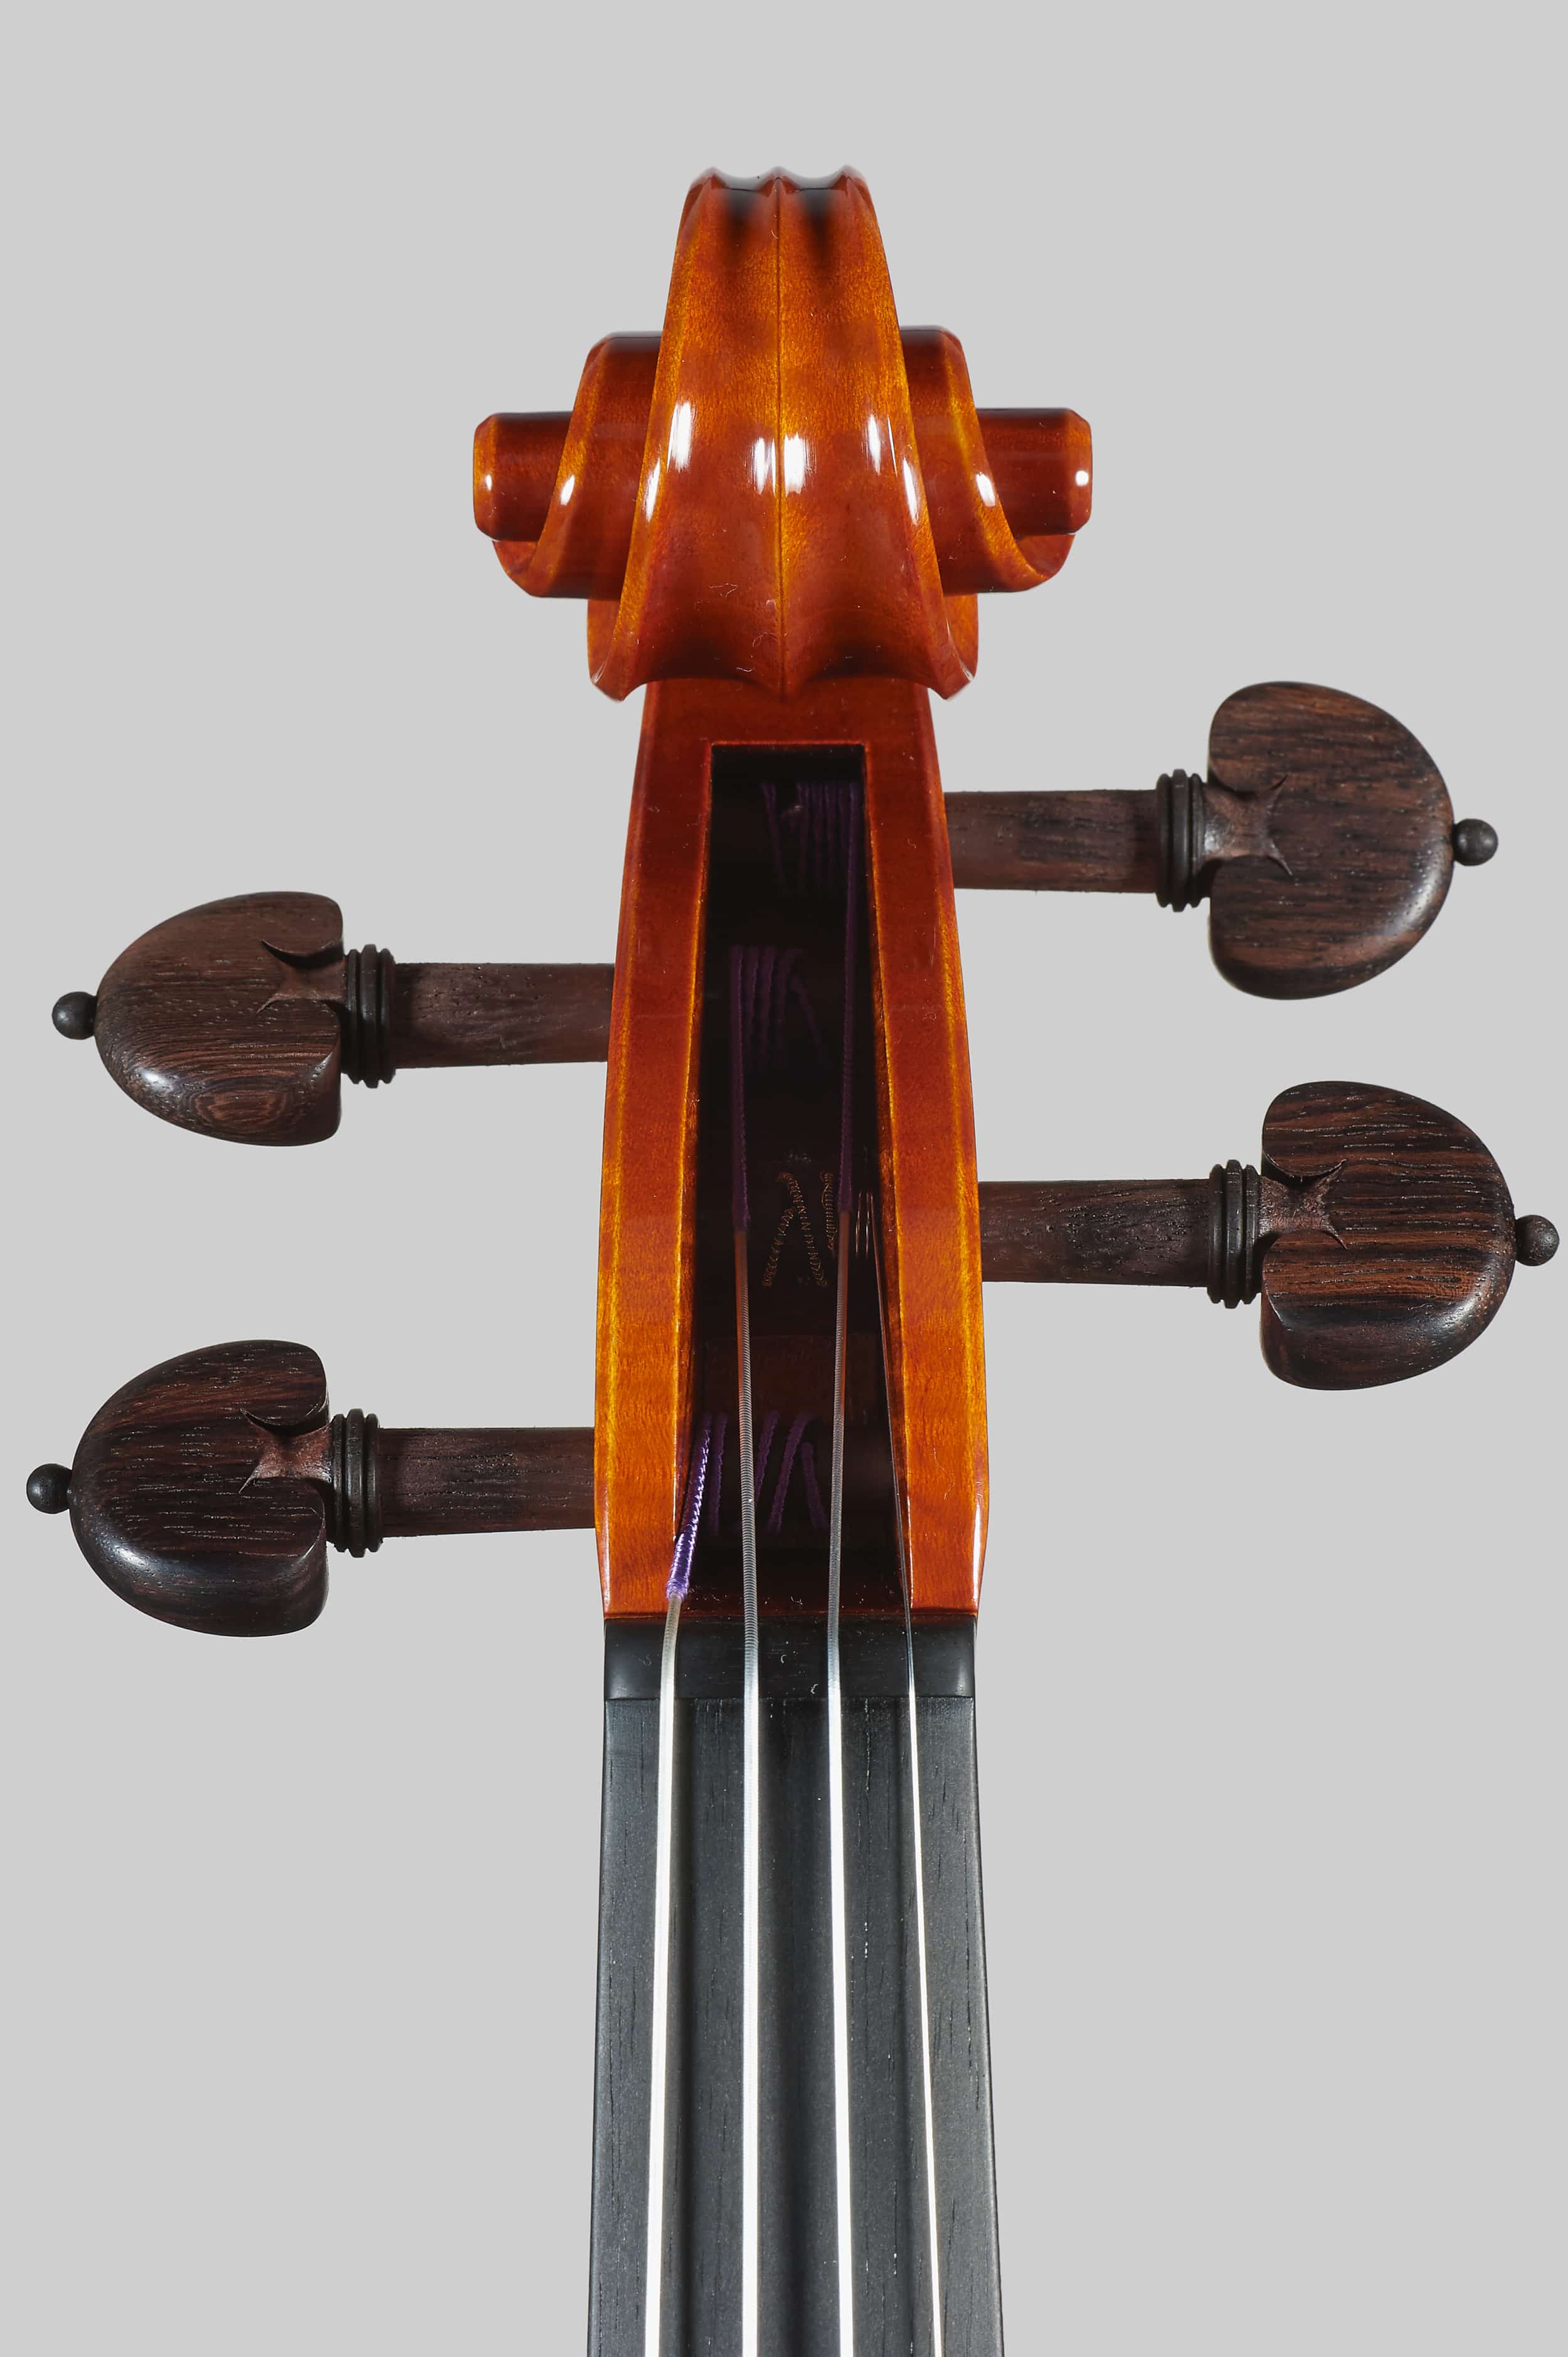 Anno 2015 – Violino modello stile A. Stradivari “Viotti” 1709 - Testa fronte